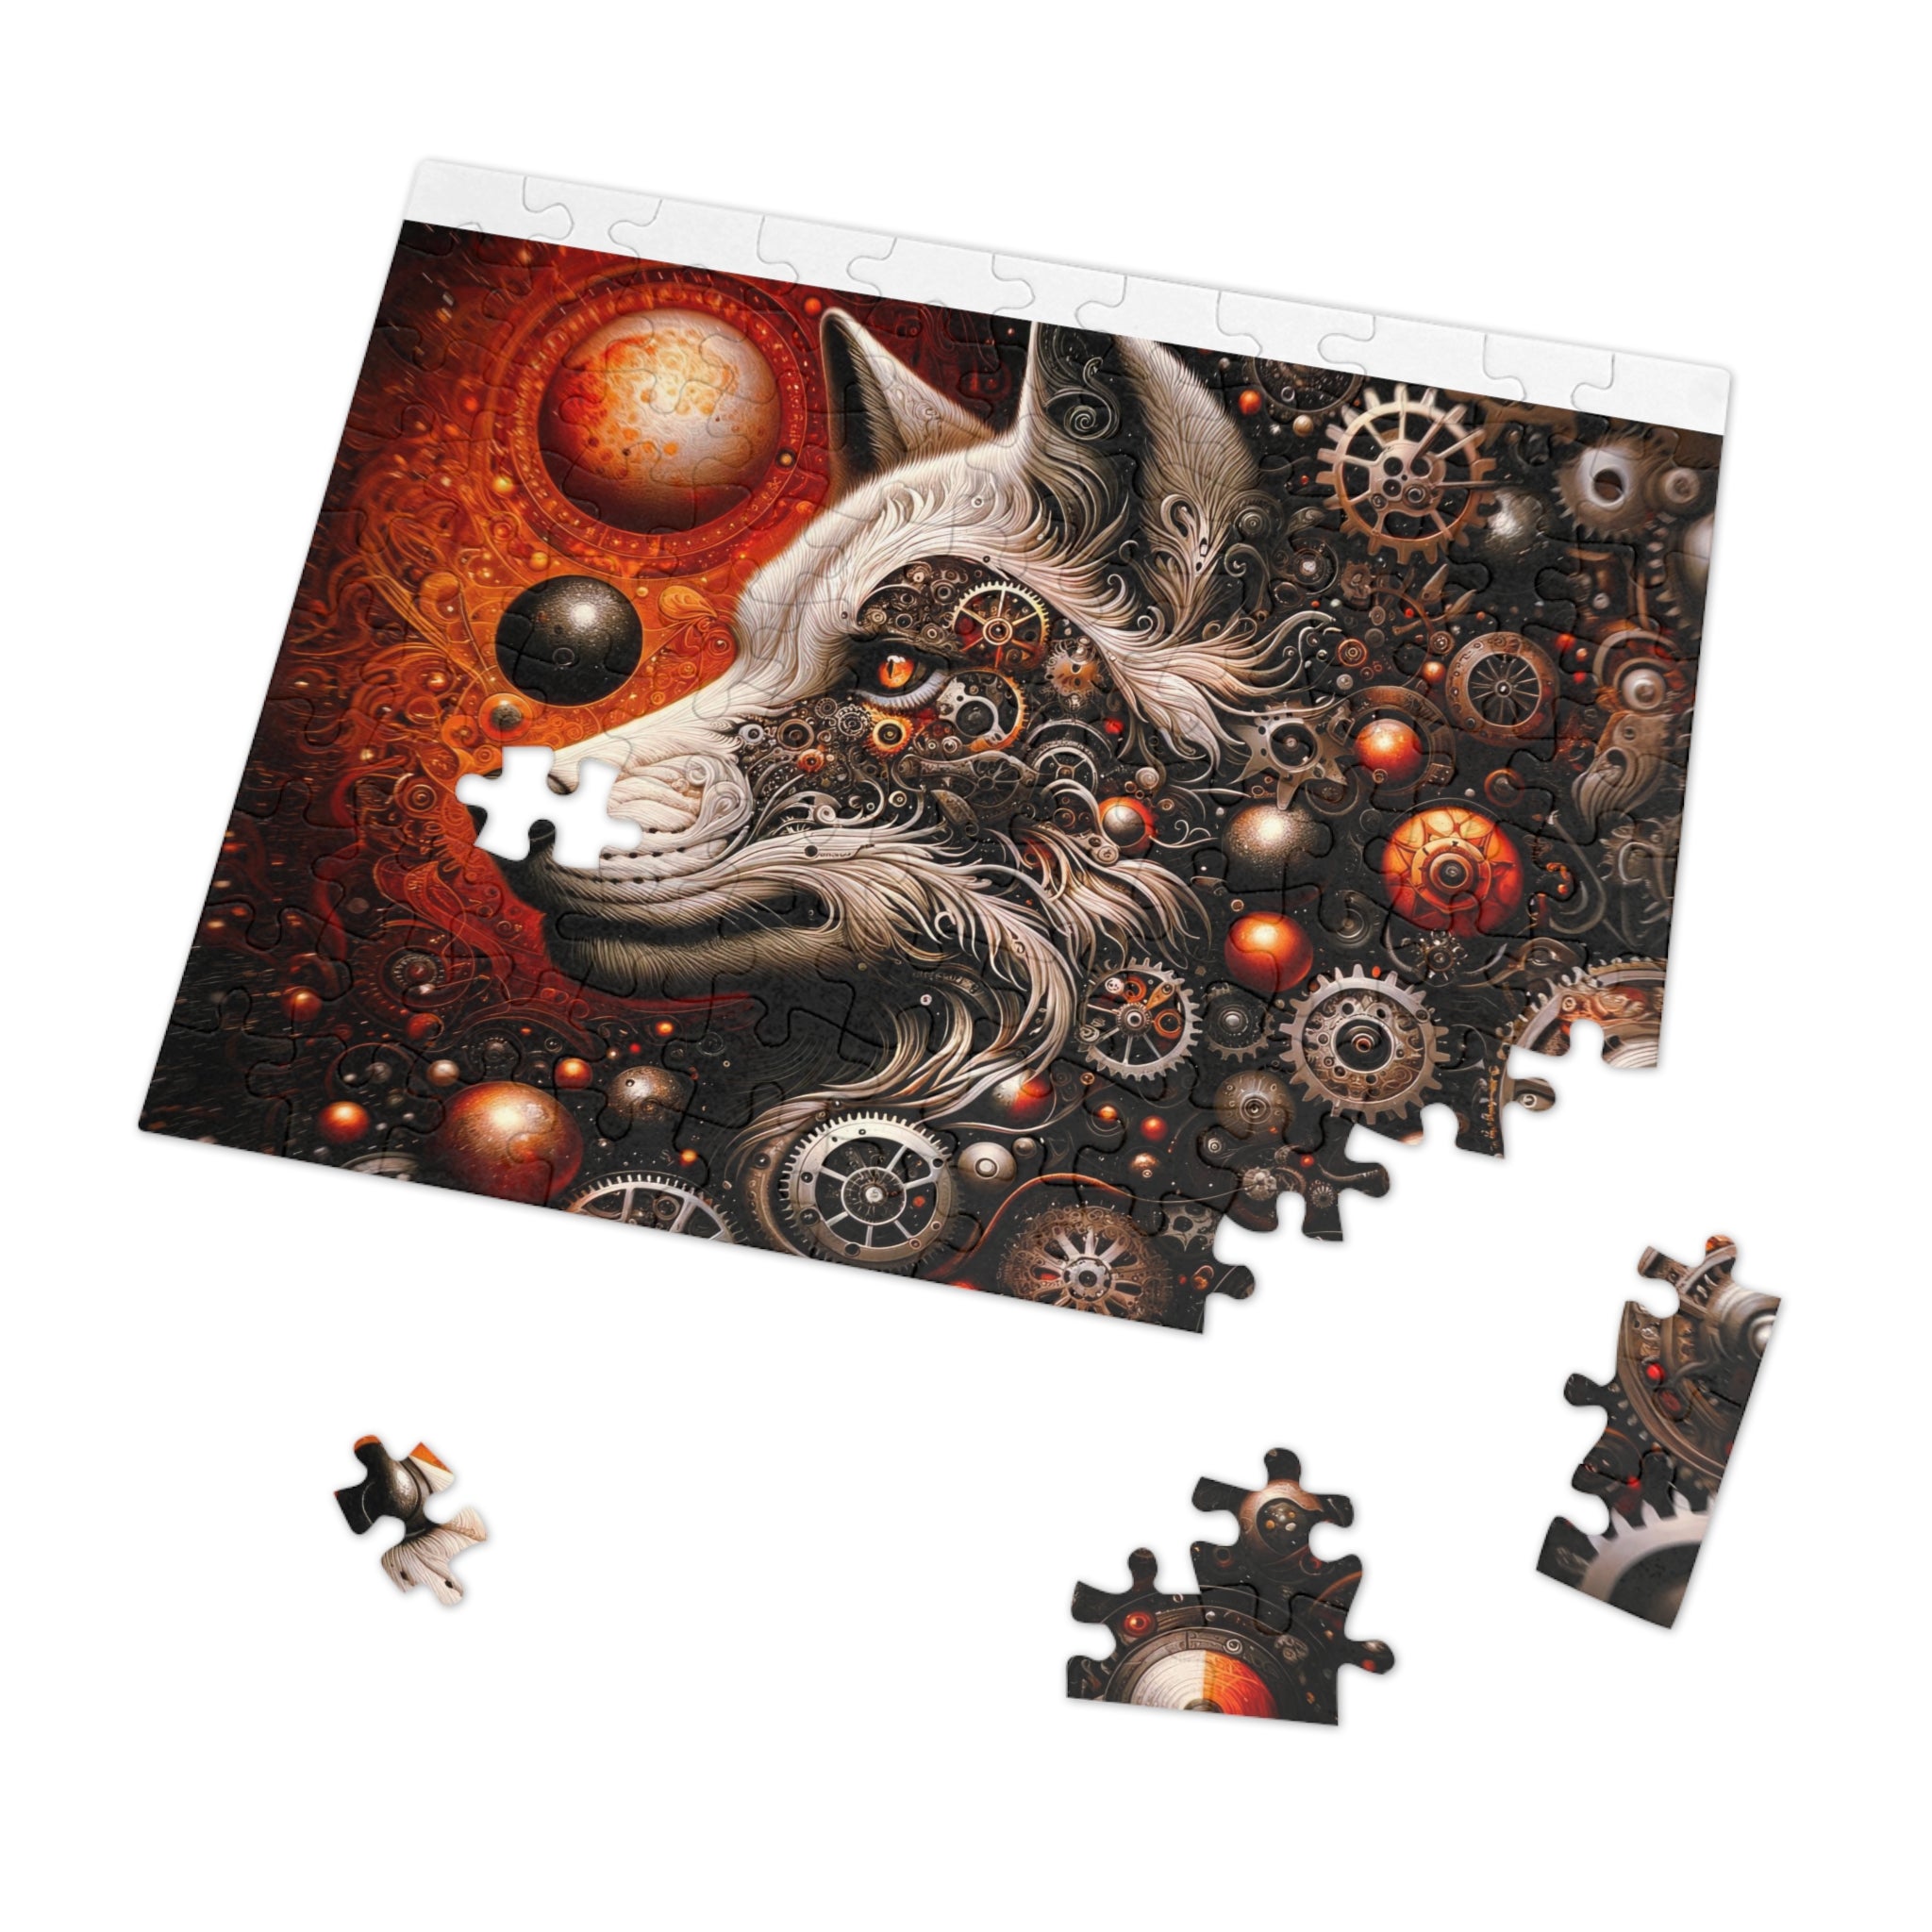 The Mechanical Beast Jigsaw Puzzle